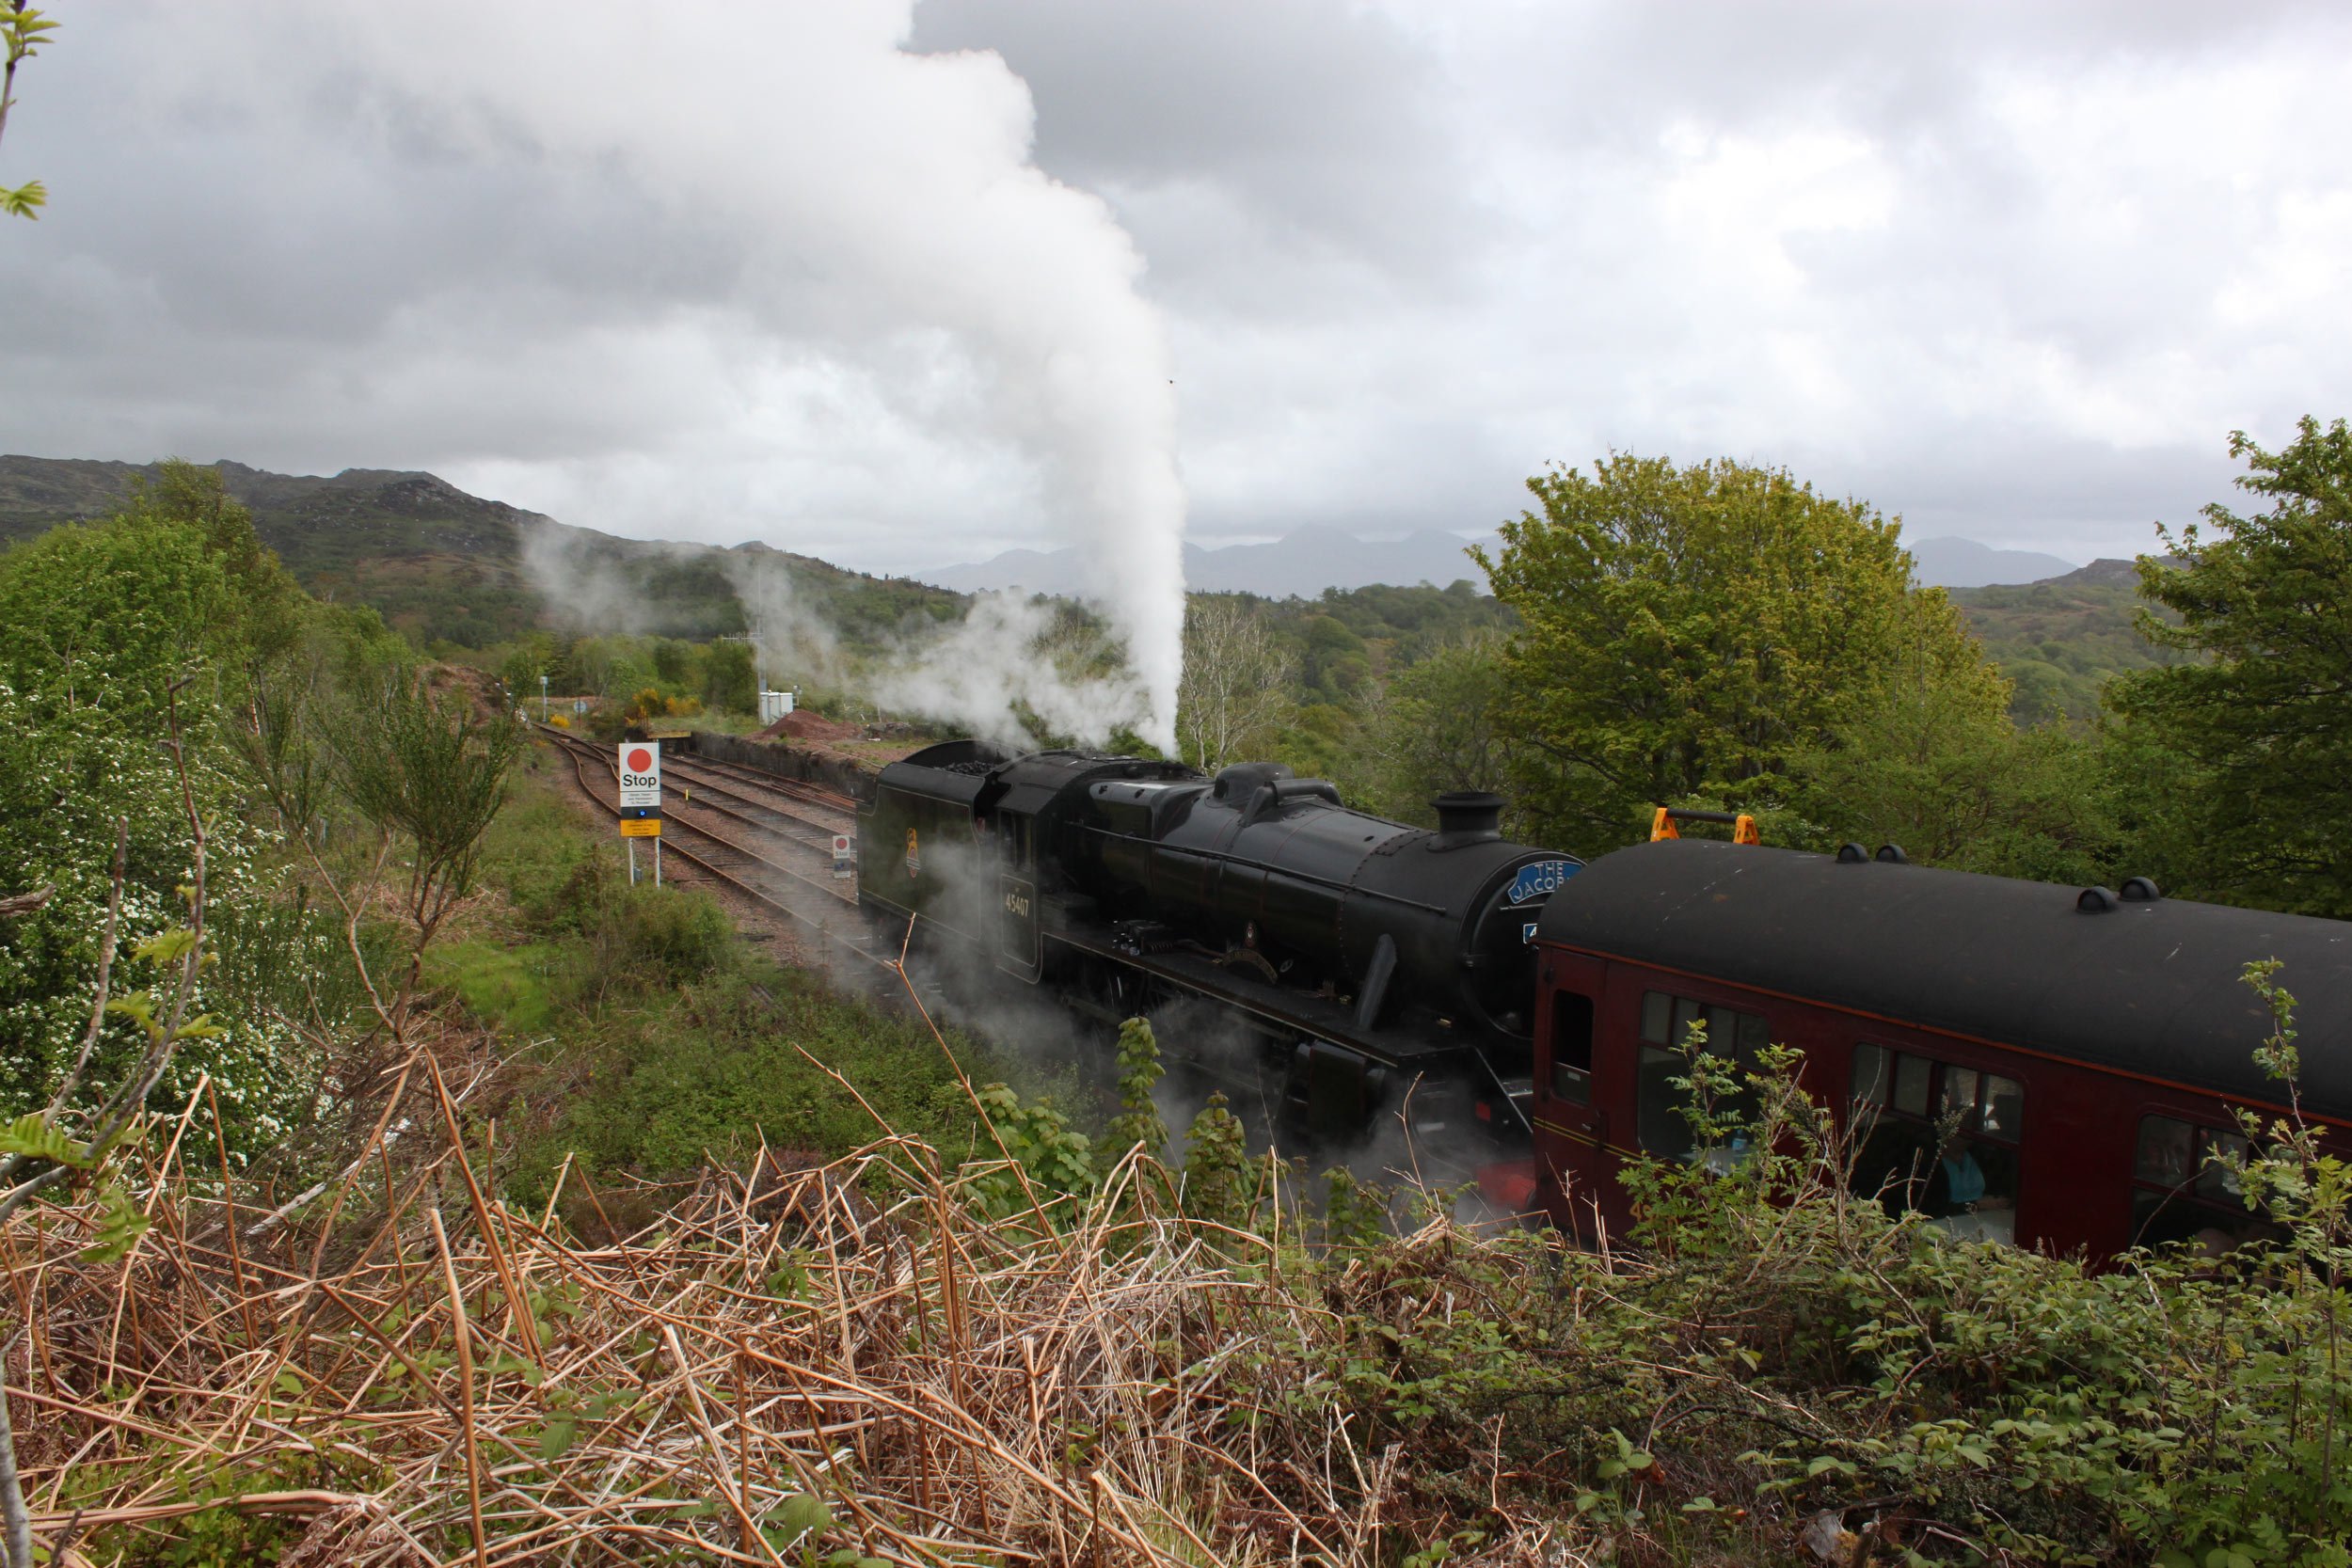 jacobite-steam-train-front-engine-on-backwards